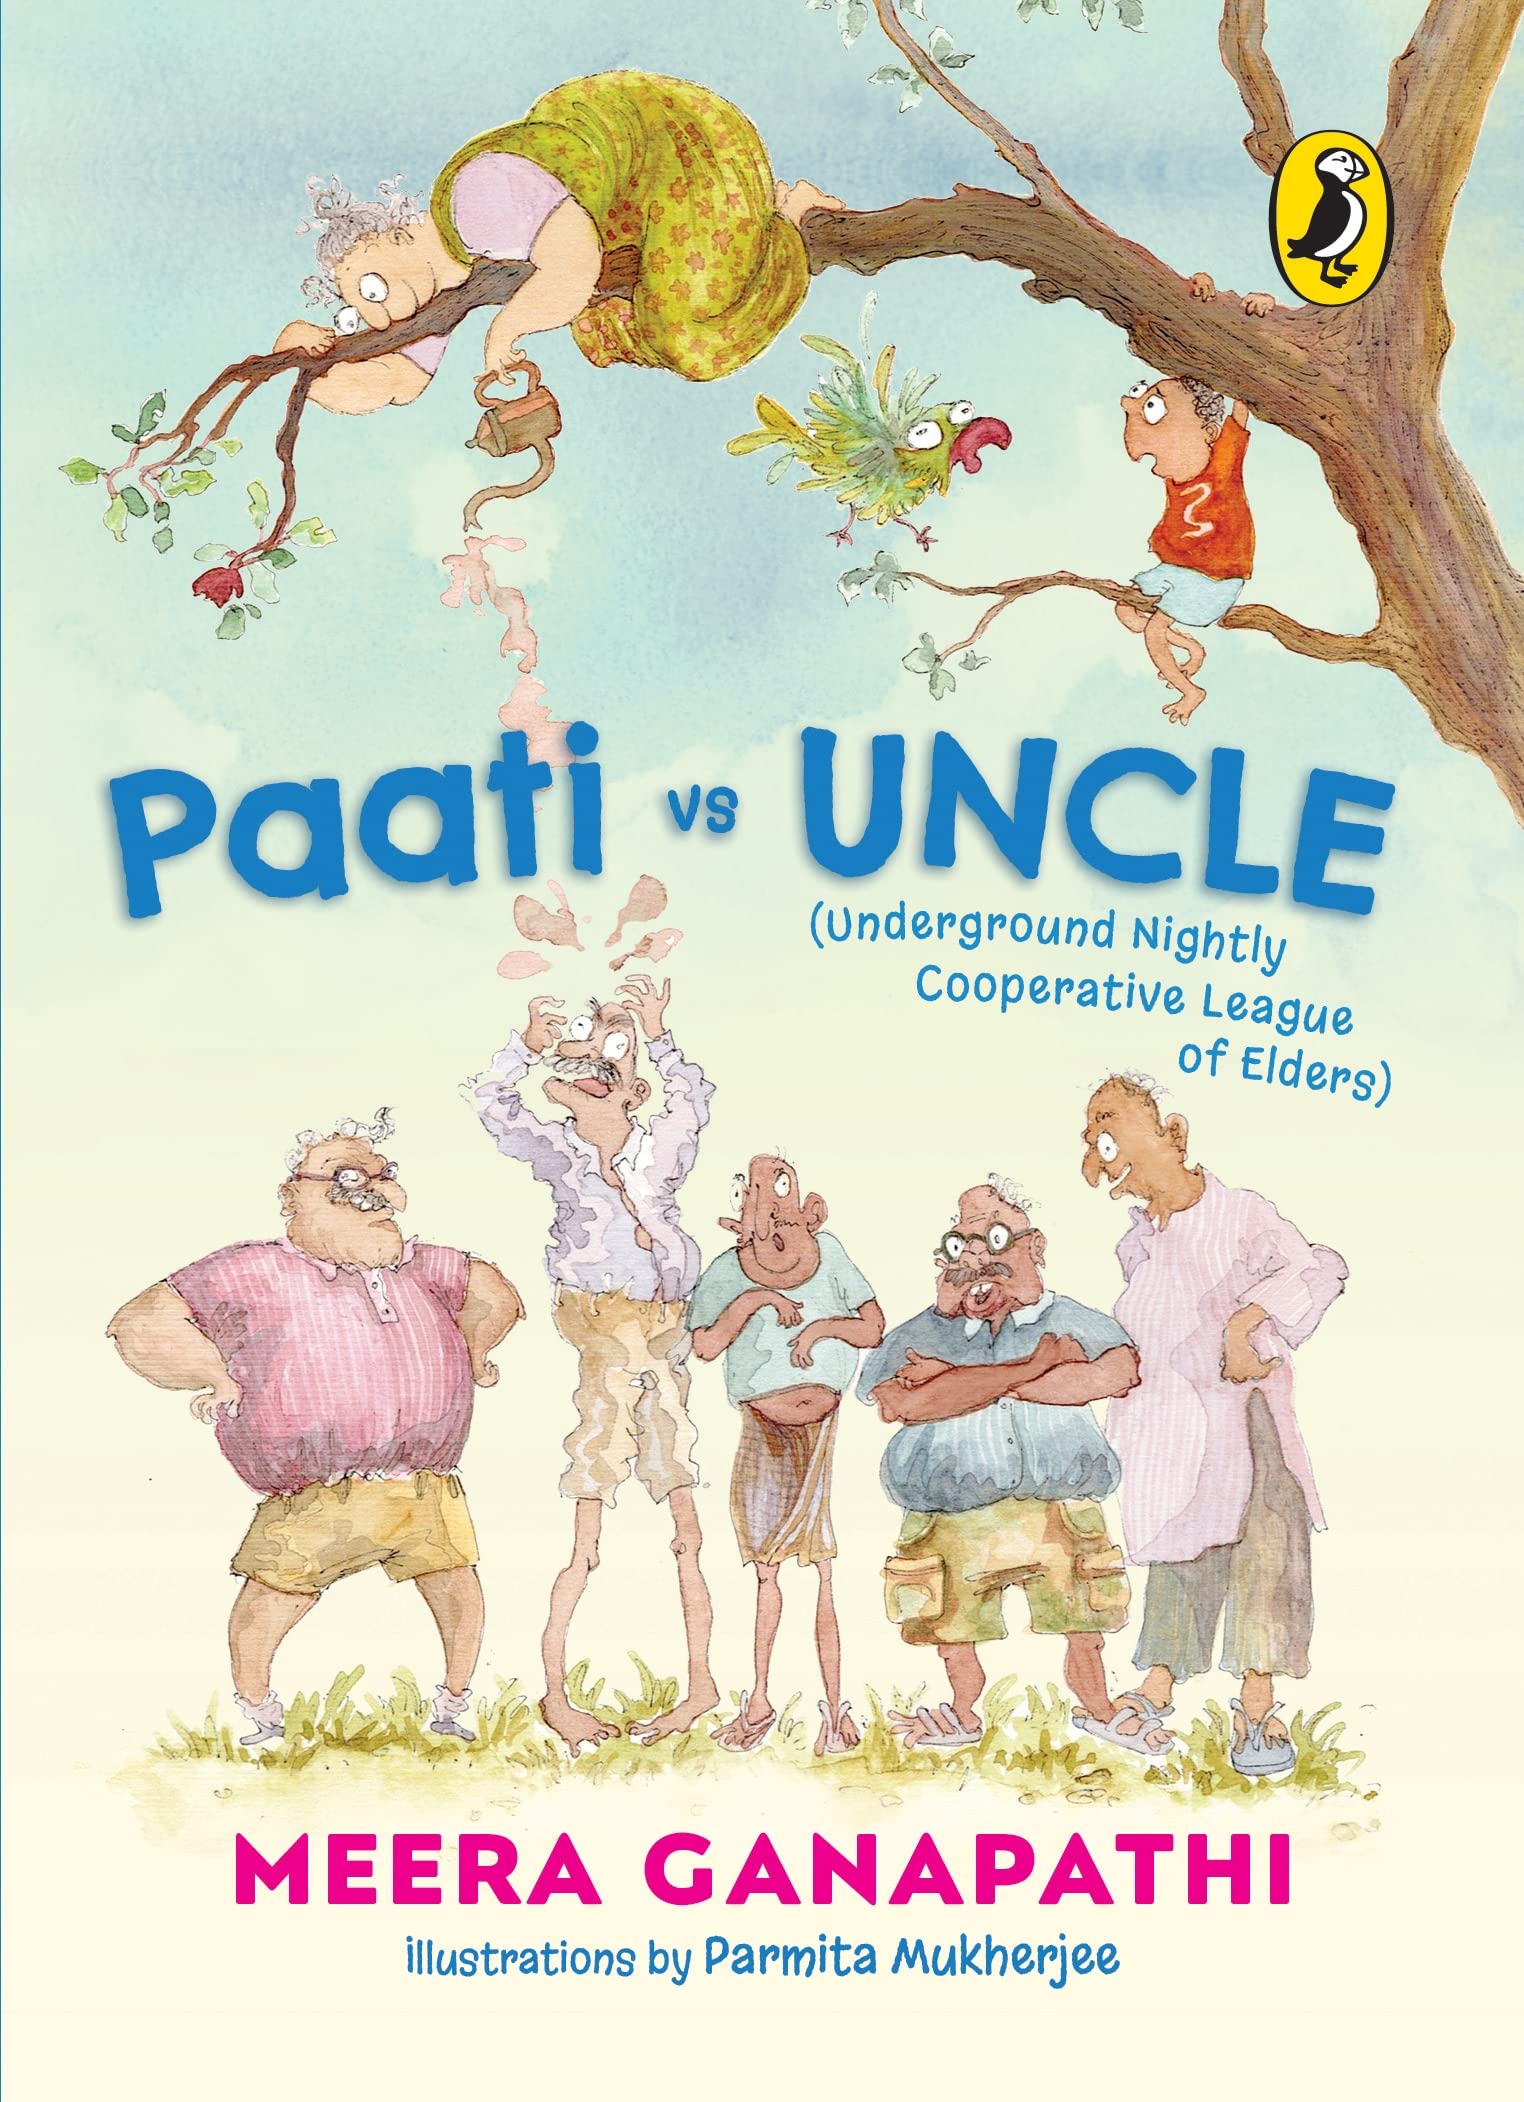  Paati vs UNCLE by Meera Ganapathi